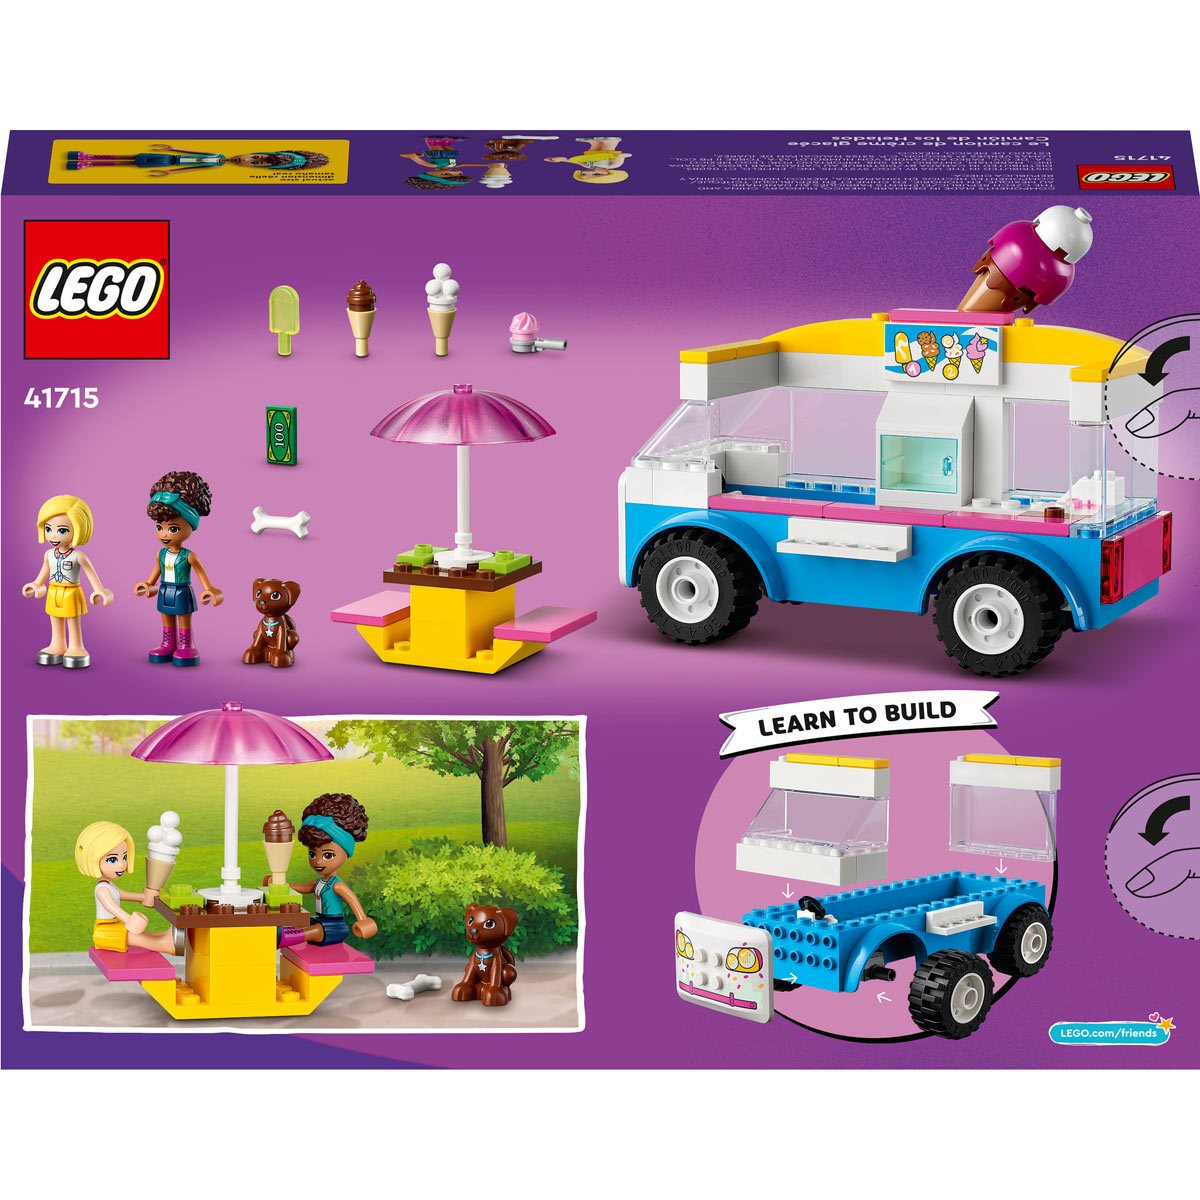 LEGO 41715 Friends Entertainment Truck Ice-Cream - Earth